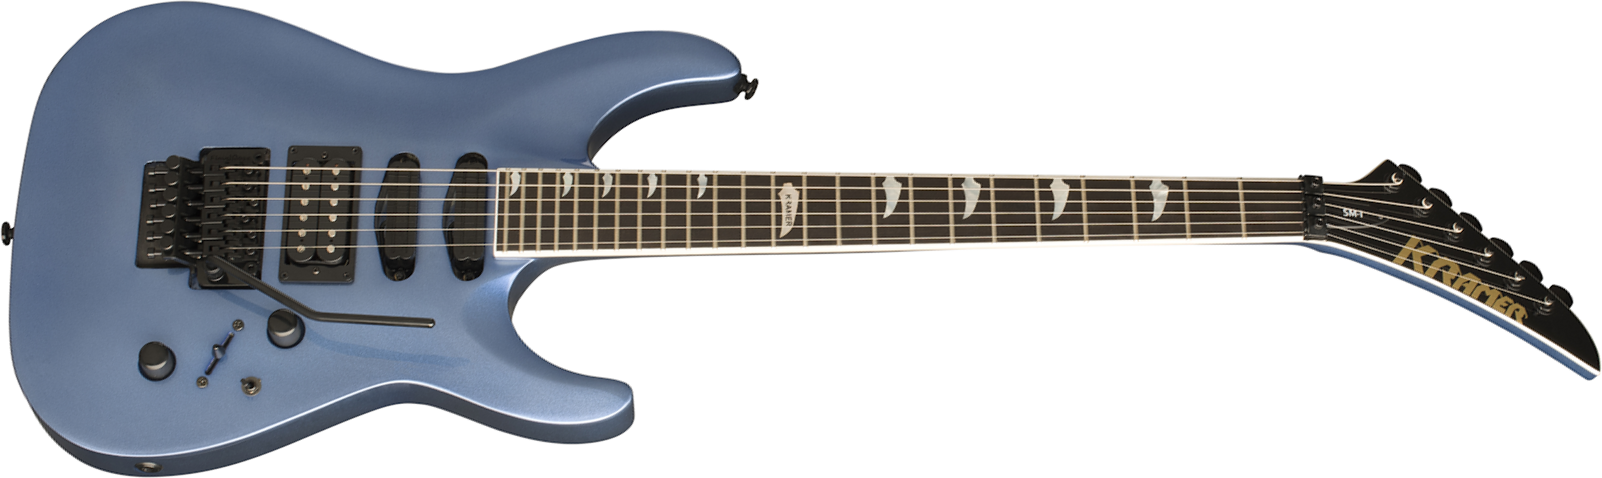 Kramer Sm-1 Original Hss Seymour Duncan Fr Eb - Candy Blue - Str shape electric guitar - Main picture